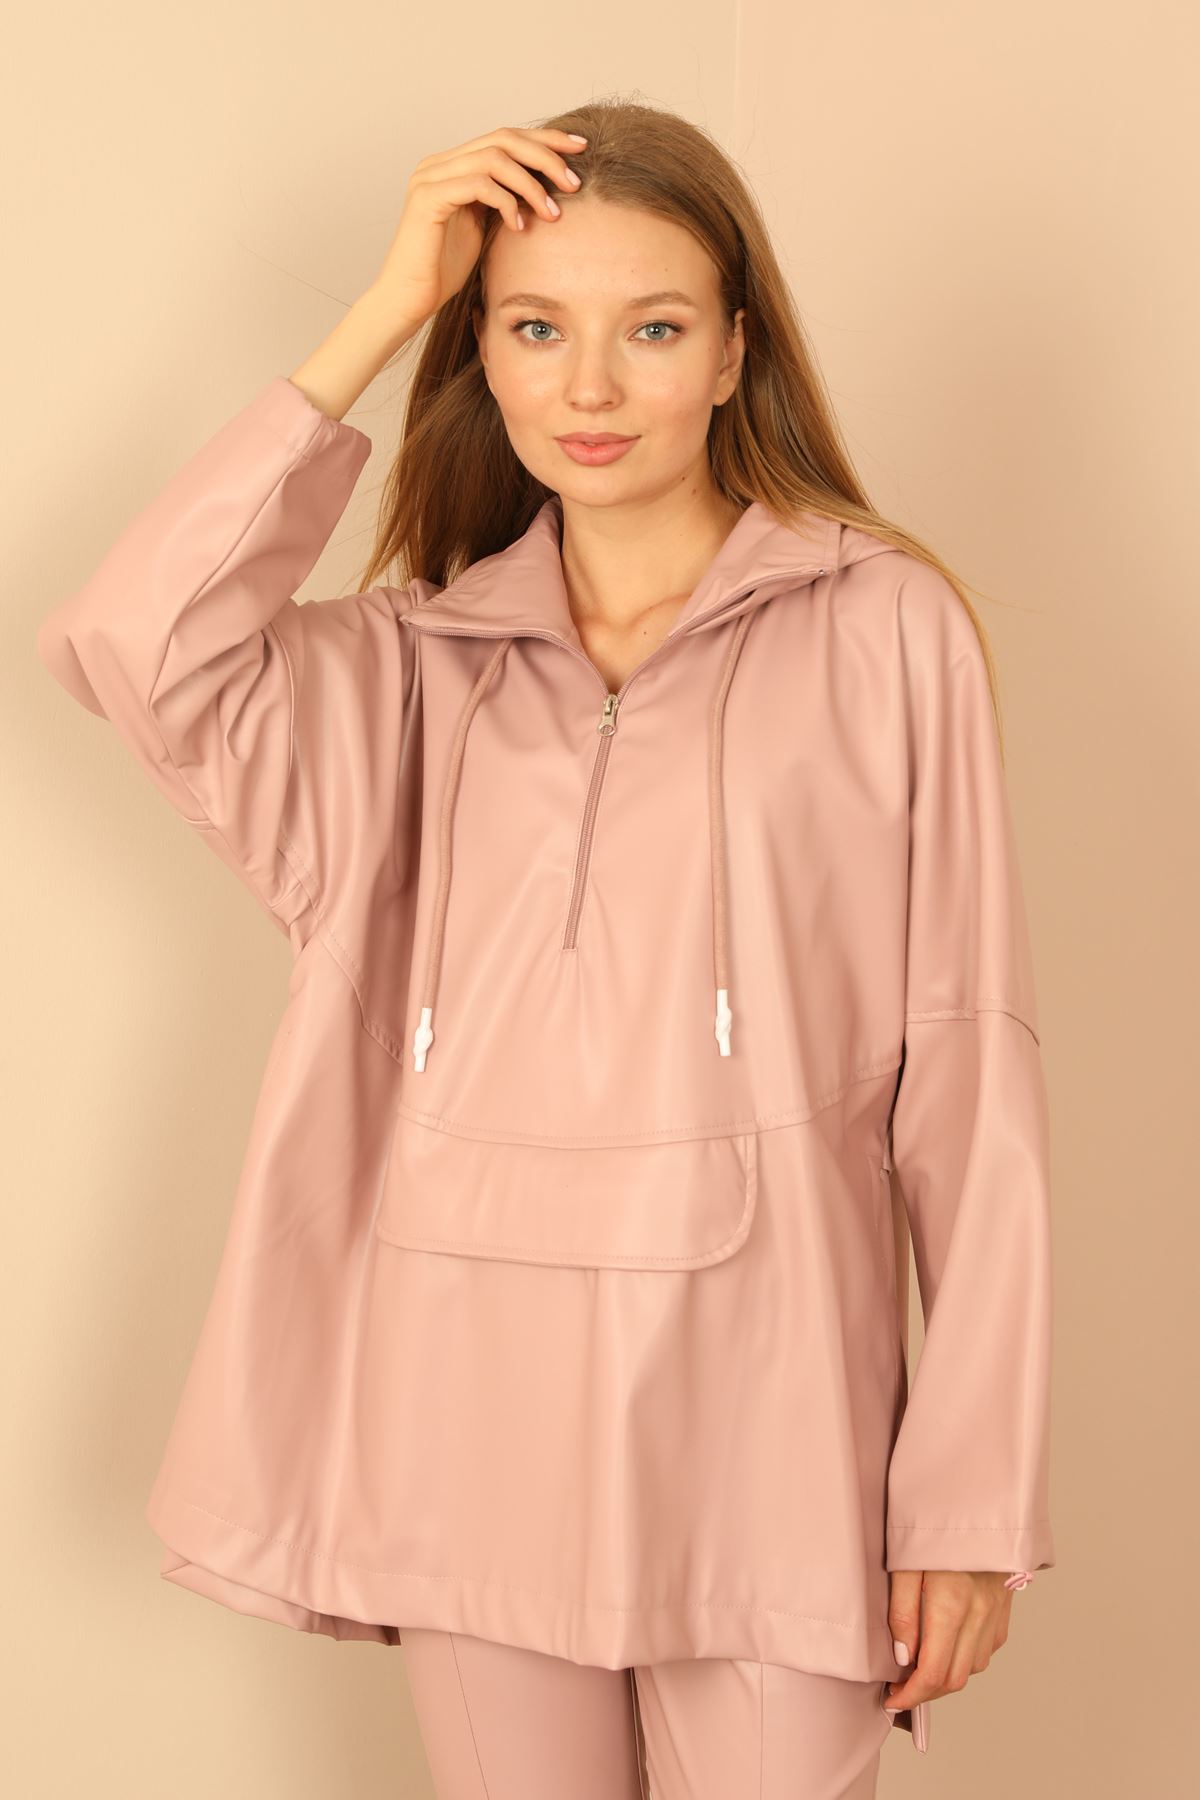 Zara Leather Fabric Long Sleeve Hooded Long Oversize Women Sweatshirt - Light Pink